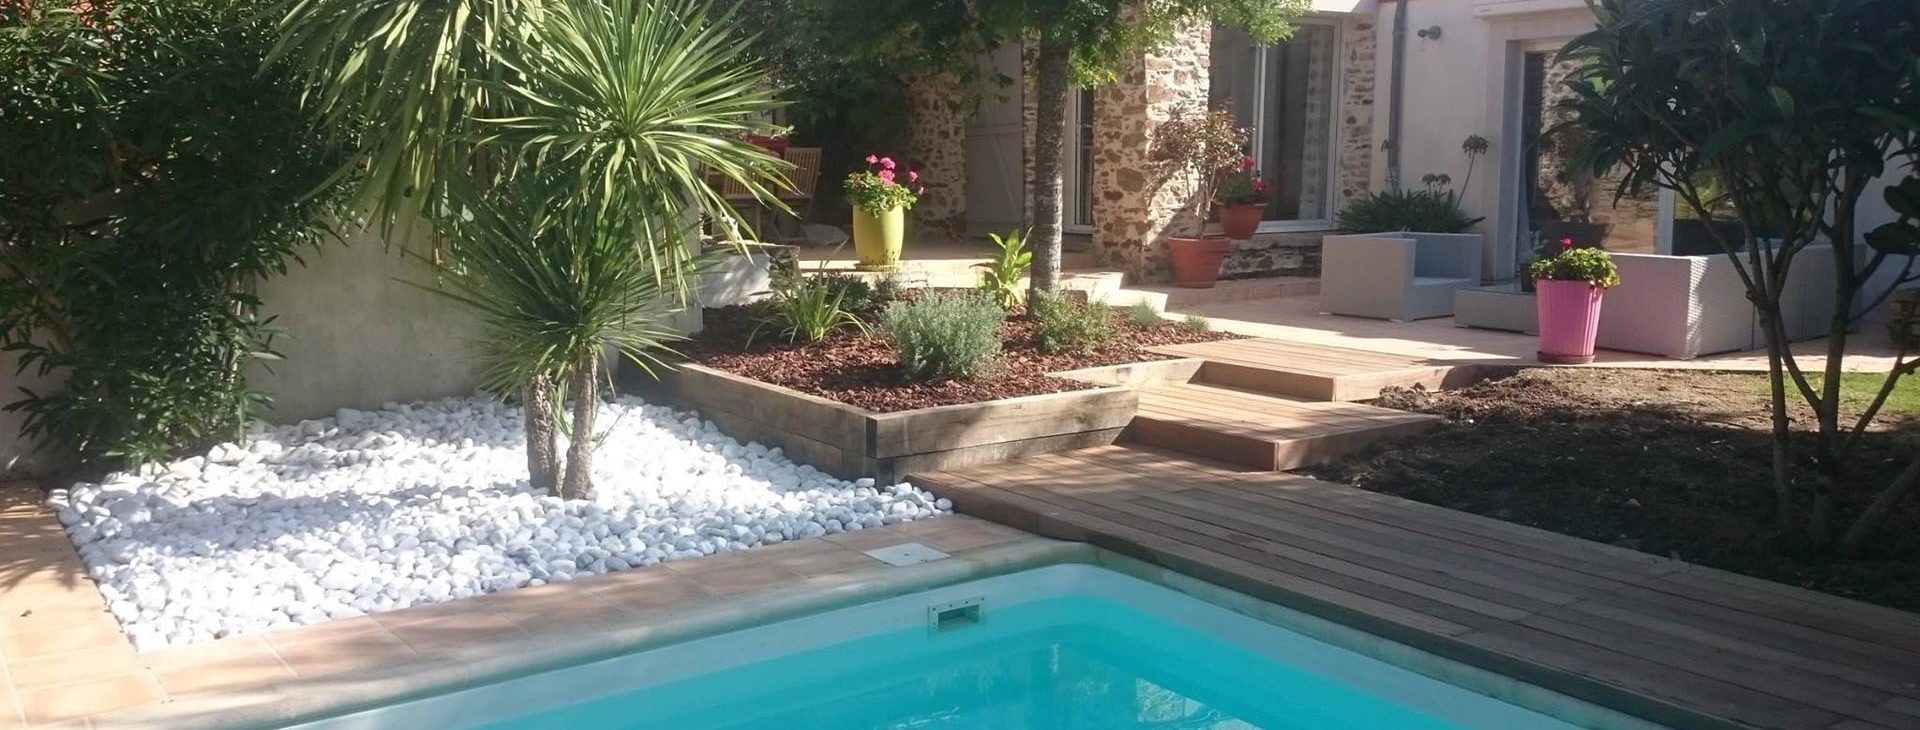 création jardin piscine spa terrasse - Paysagiste Nantes 44 Loire Atlantique